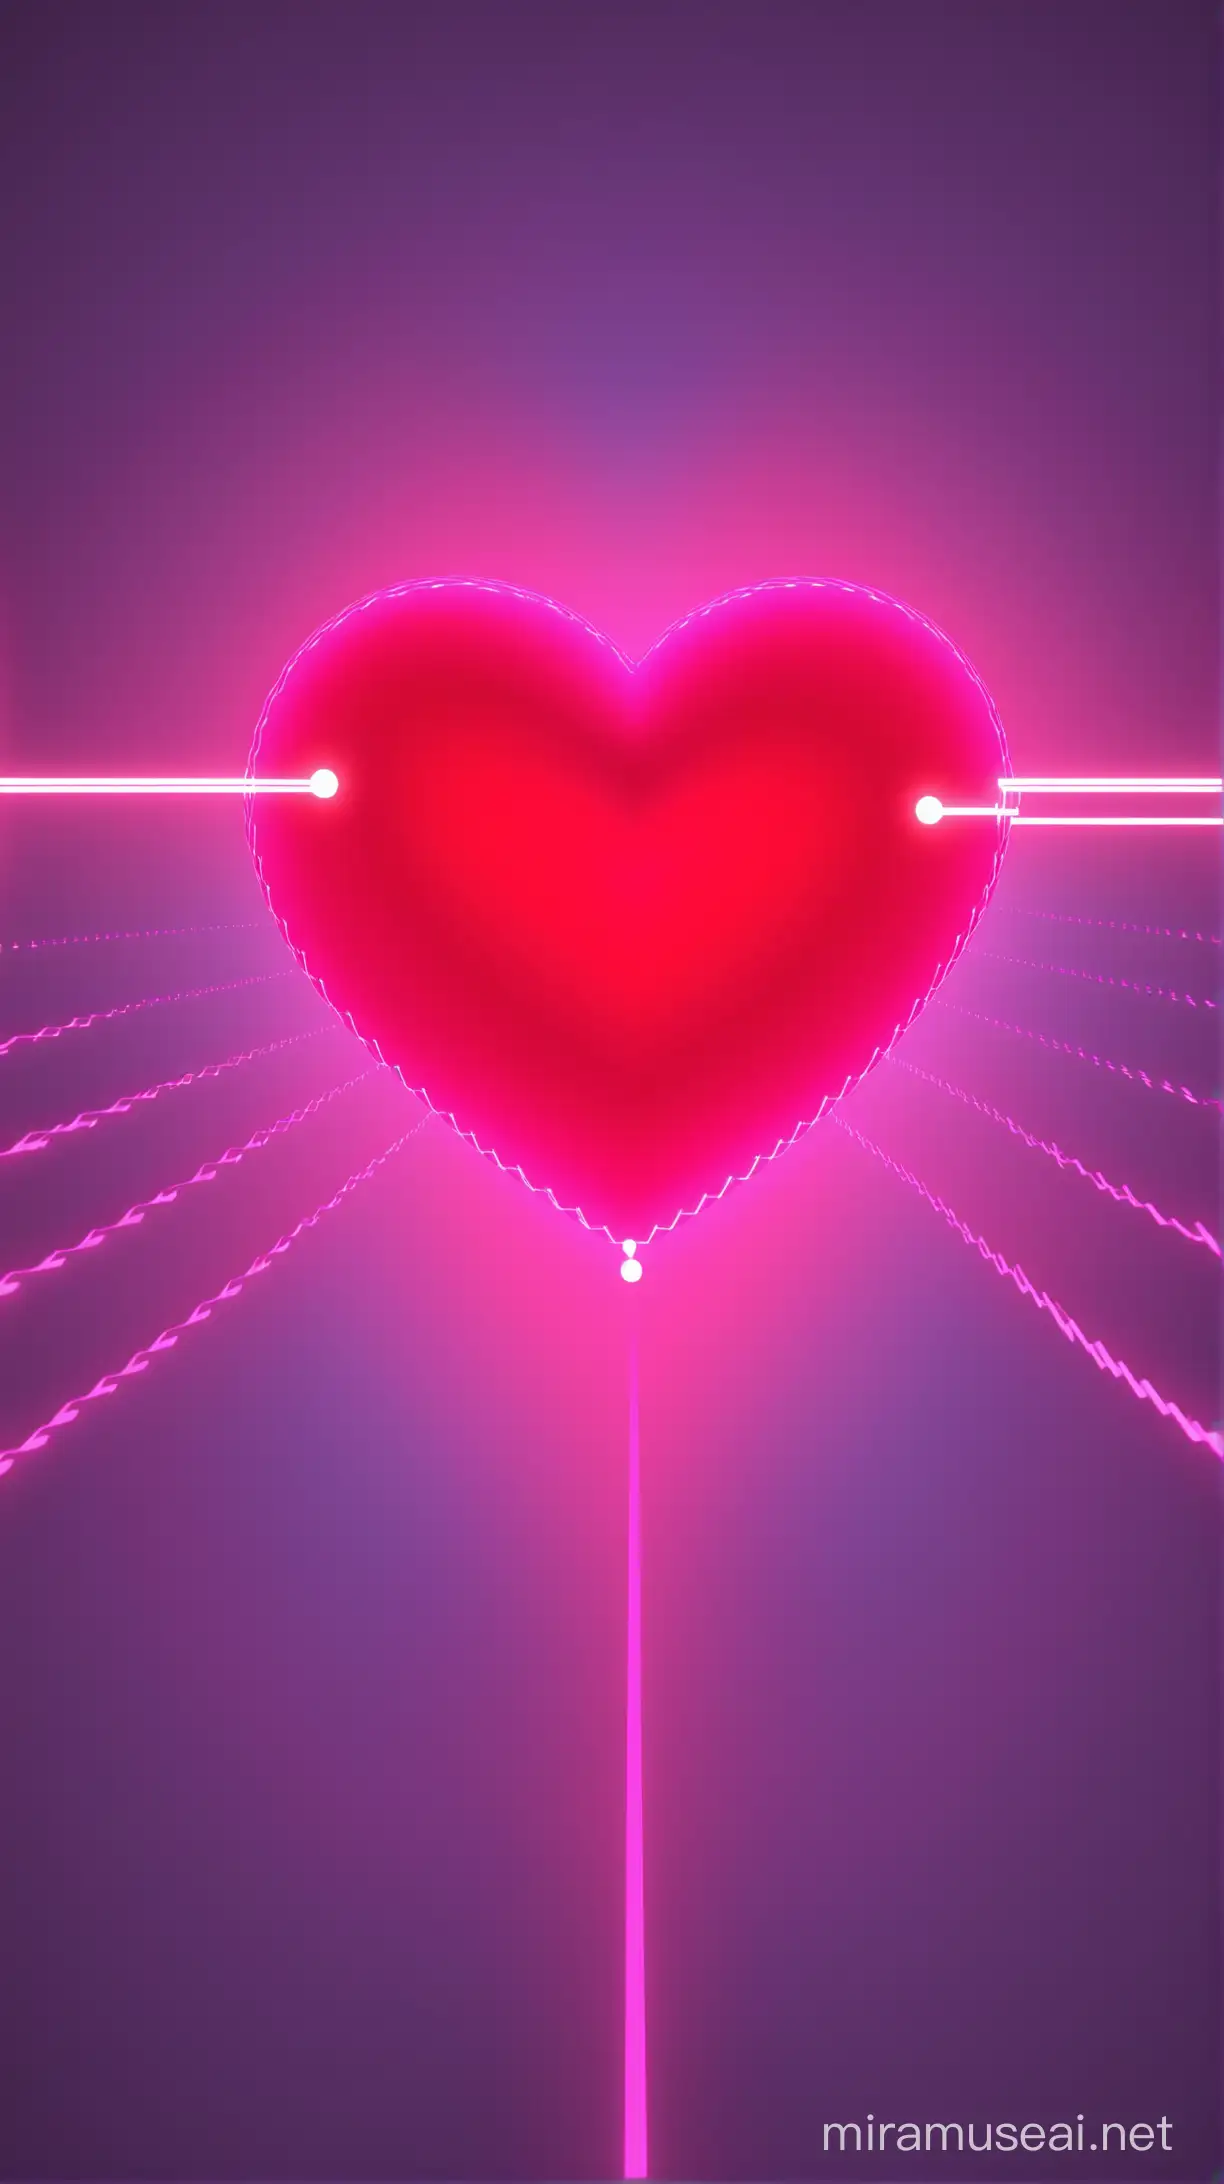 Dynamic 3D Visualization of Heartbeats at 100 Beats per Minute